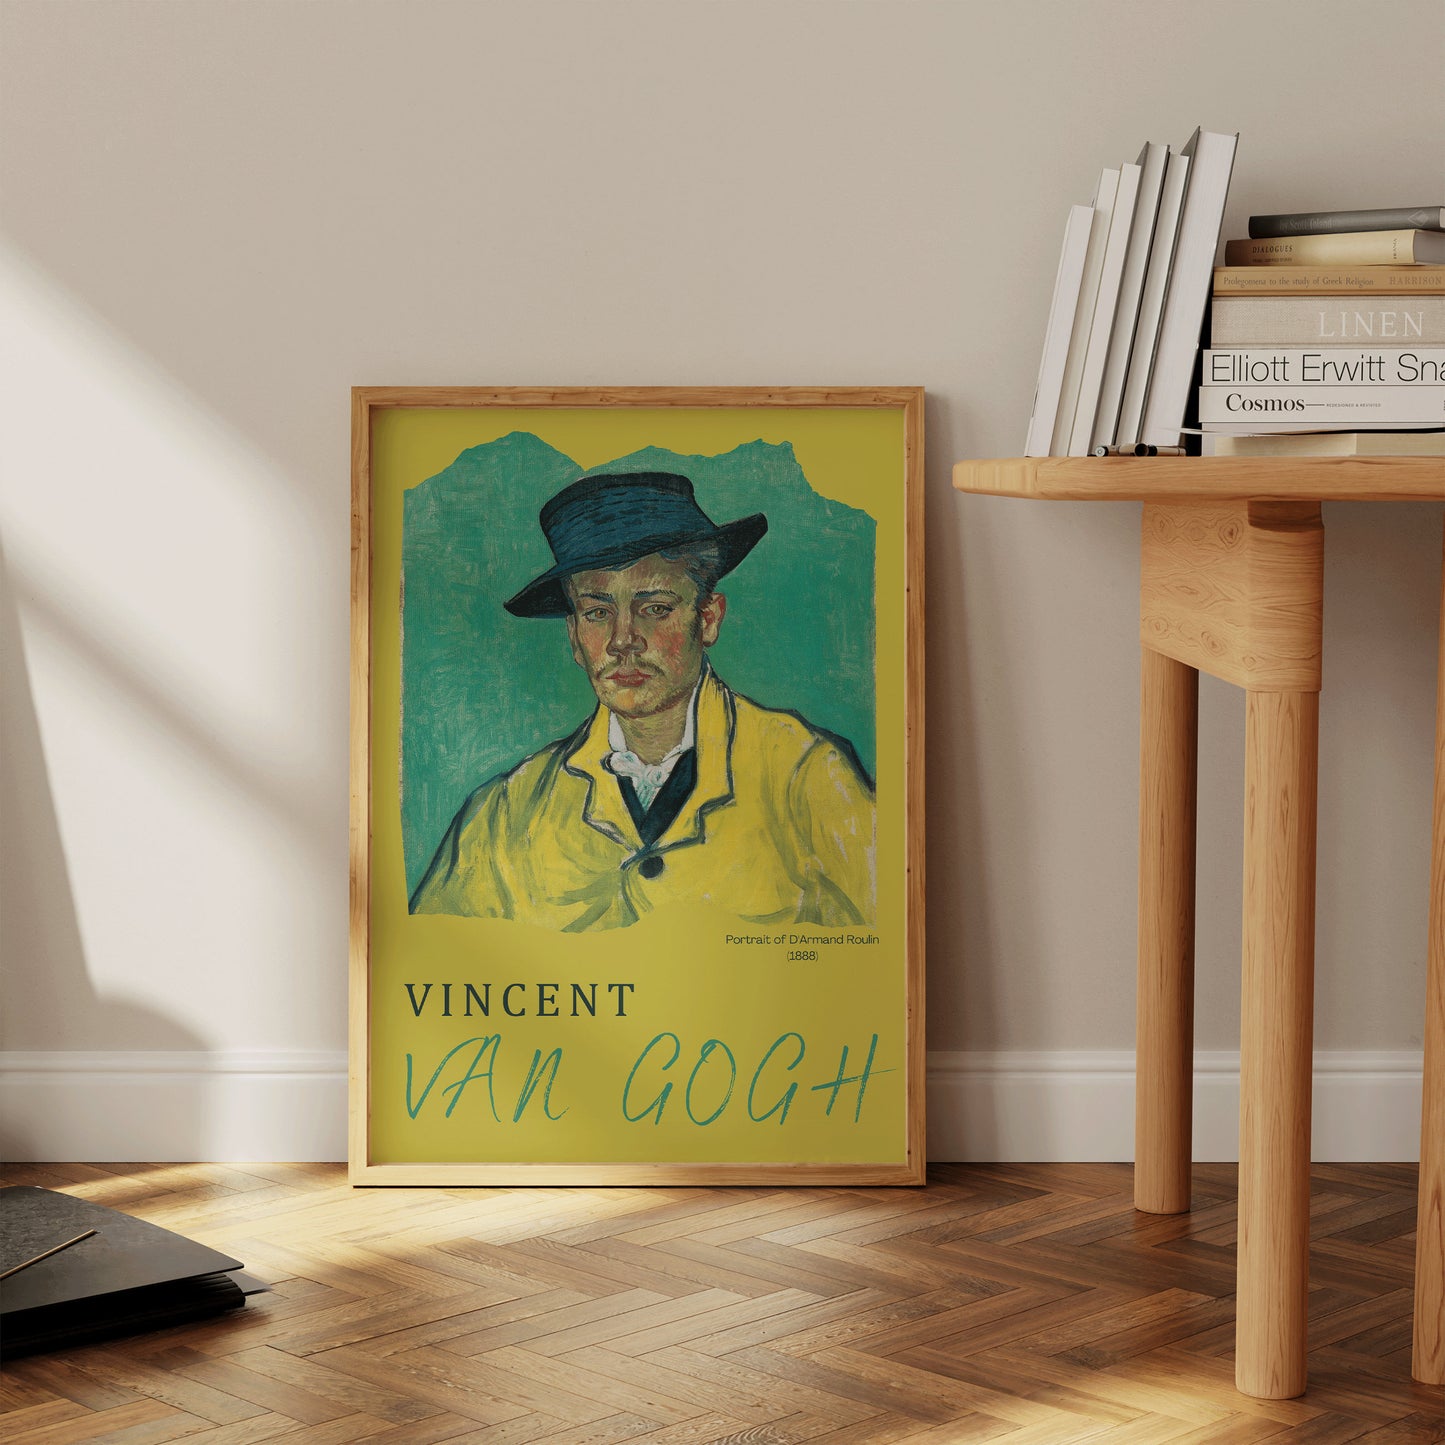 Van Gogh - Portrait of D'Armand Roulin